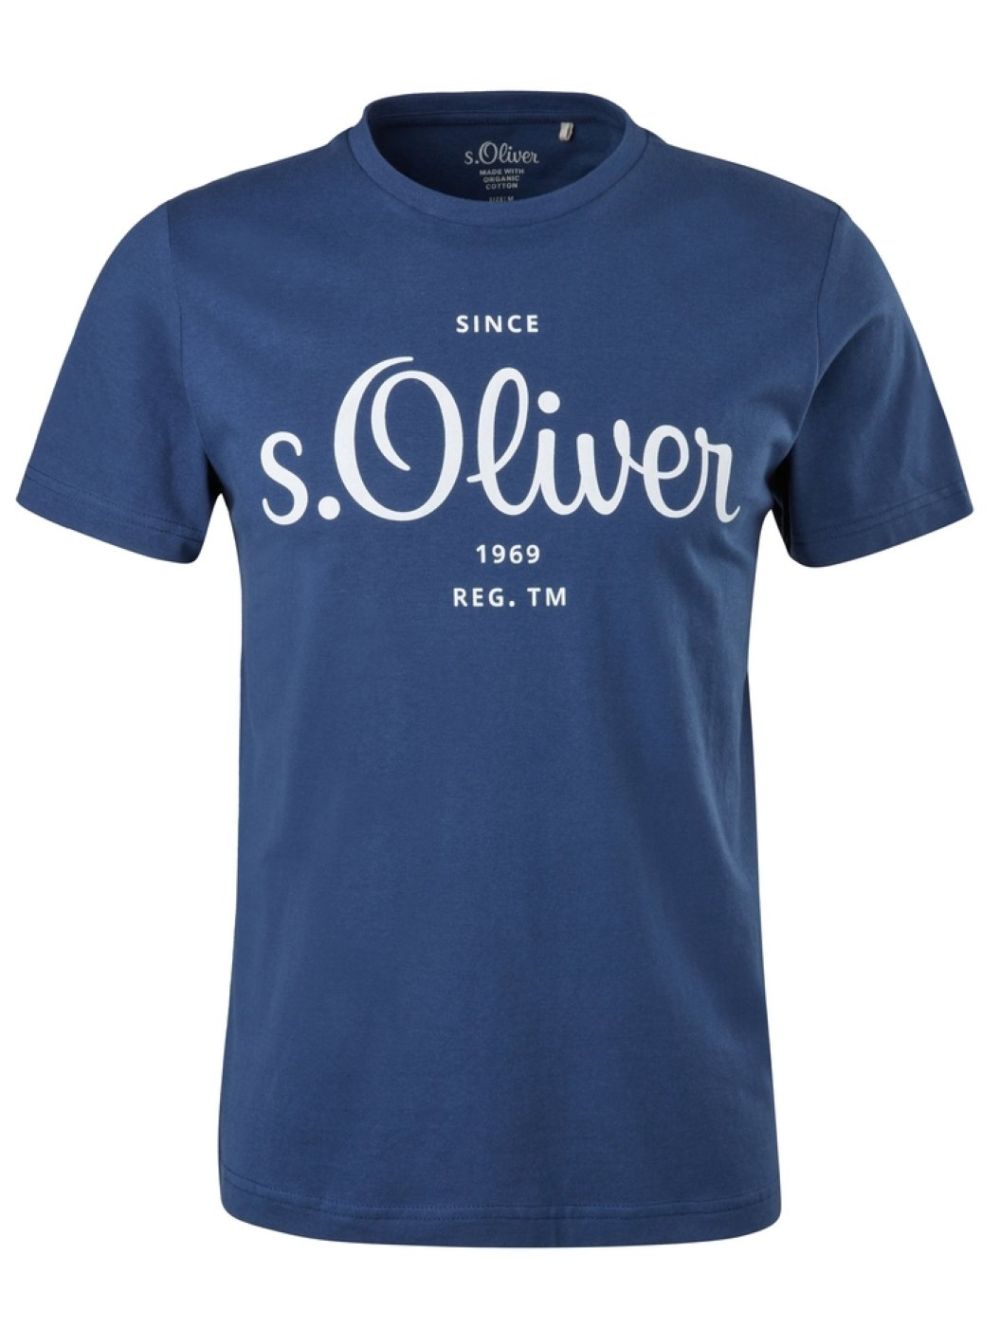 S.OLIVER short-sleeved Men\'s Ocean 2057432-5693 jersey Blue blue T-Shirt